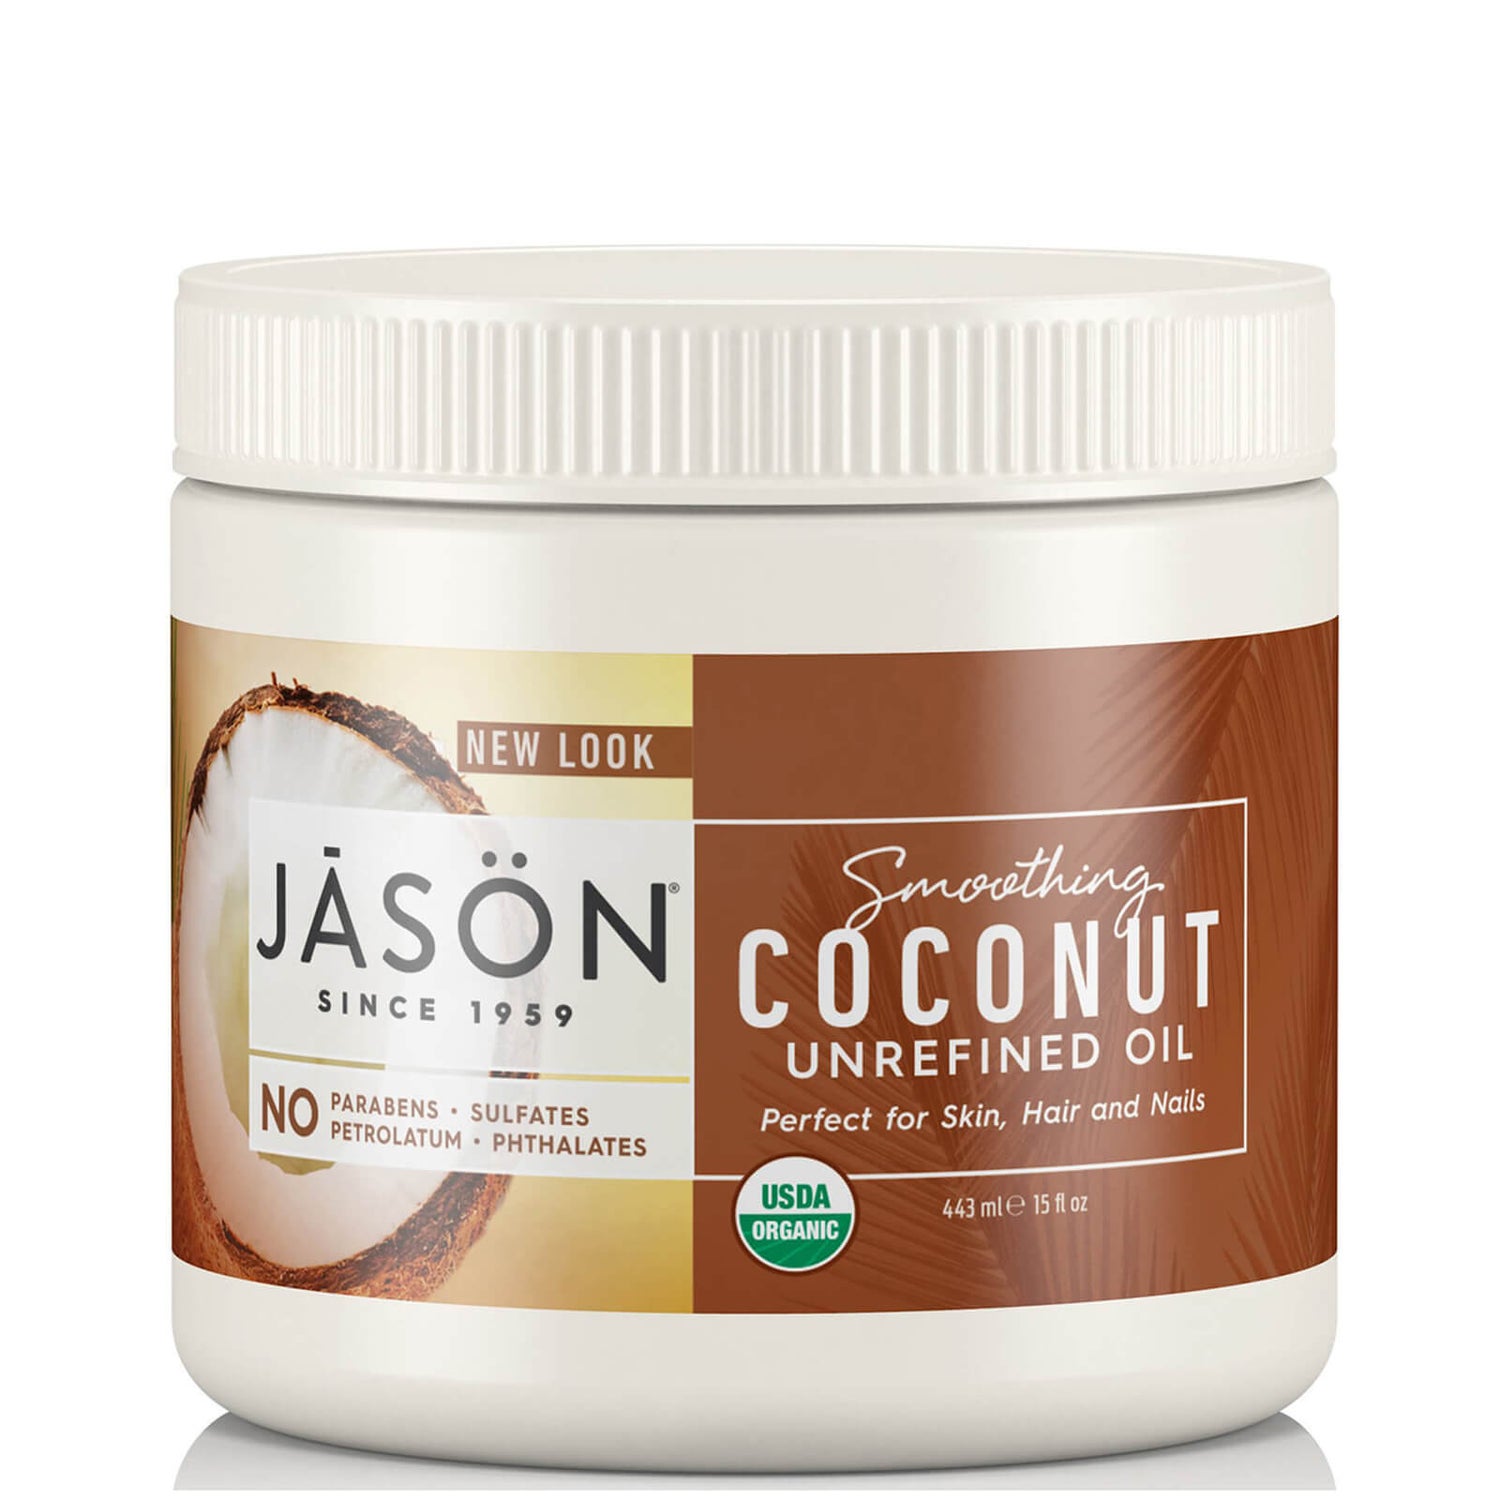 JASON Smoothing Organic Coconut Oil 443ml